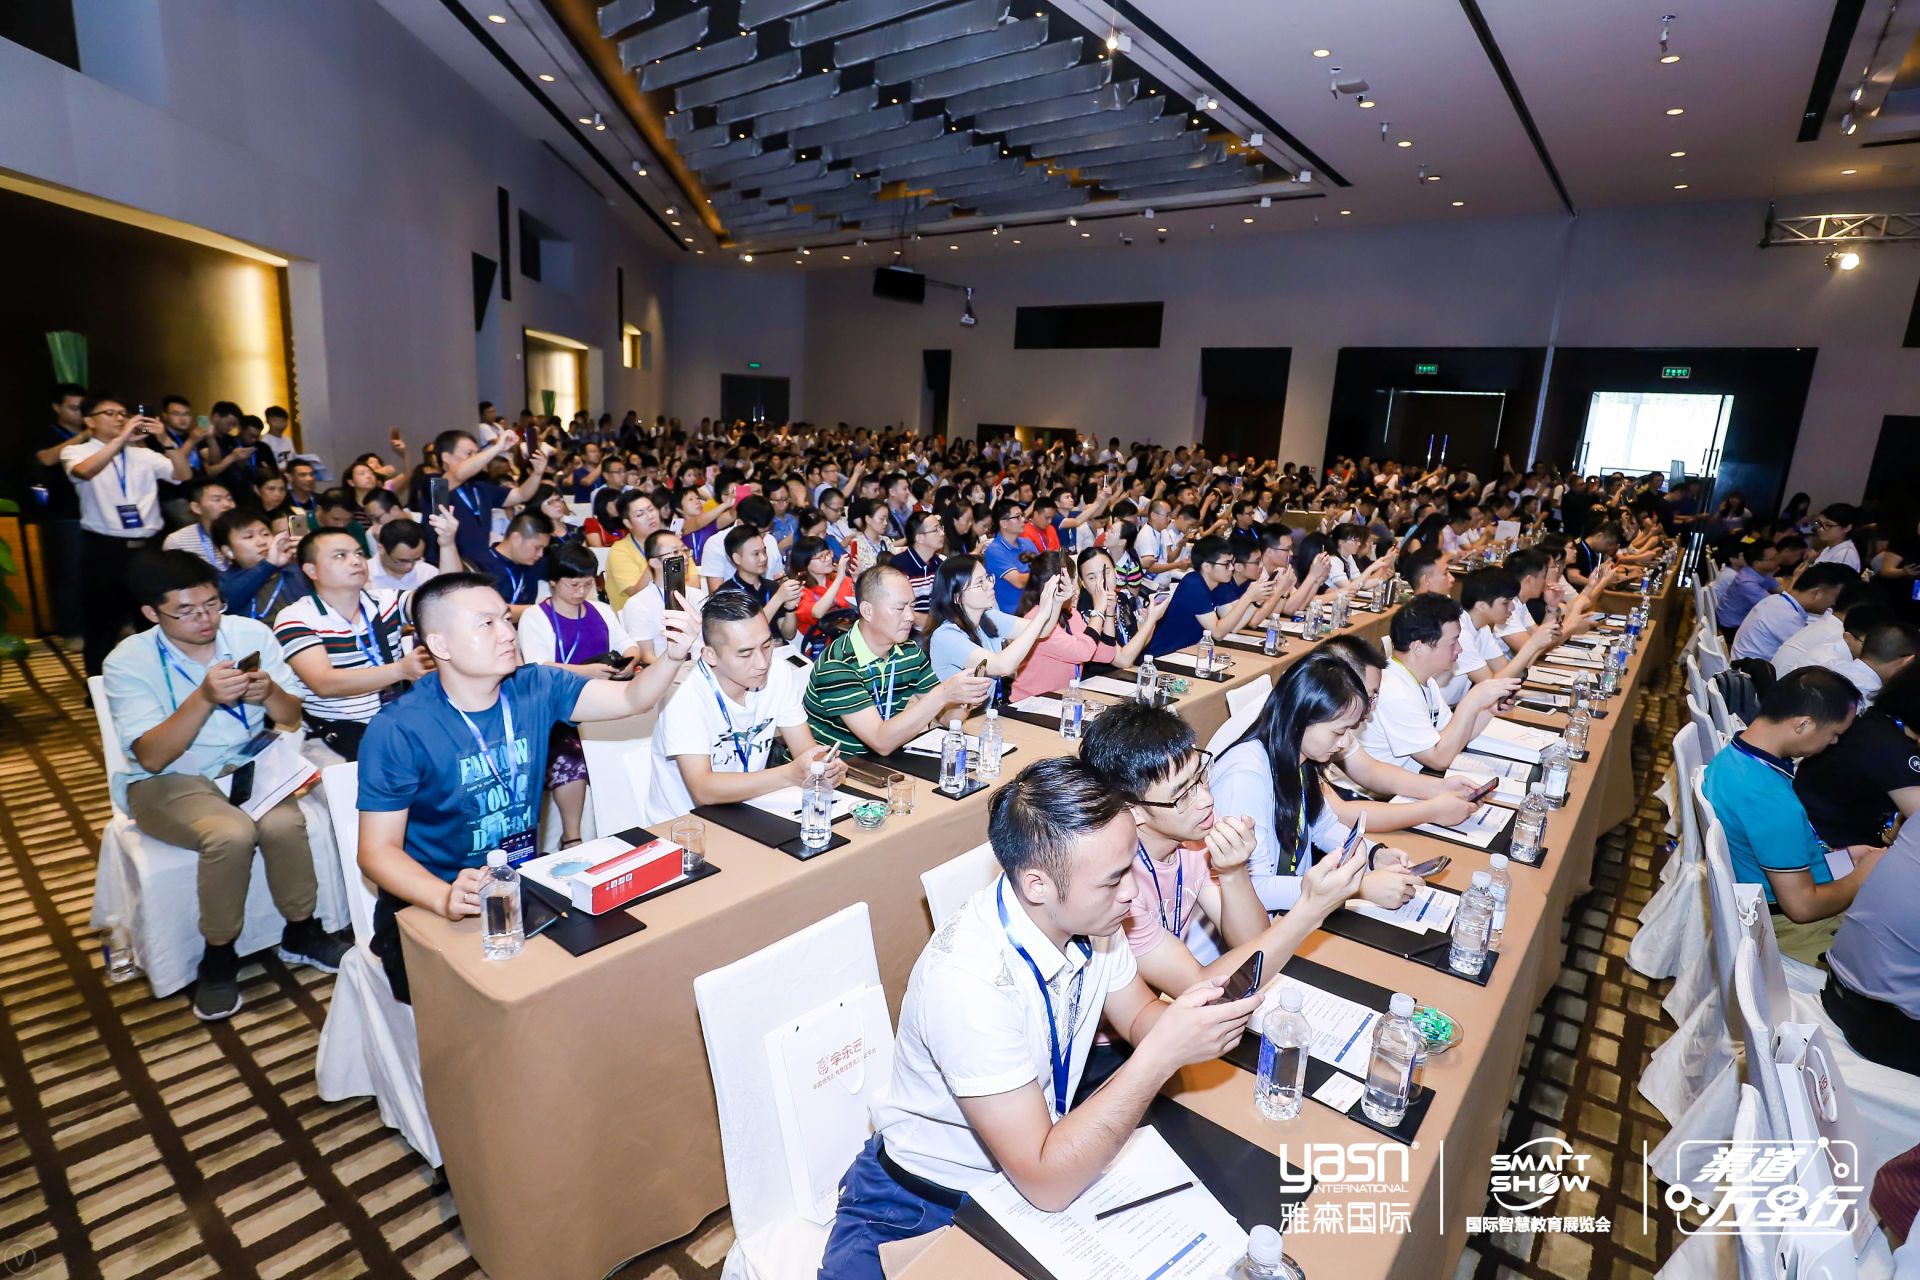 SmartShow2020智慧教育领袖峰会 渠道万里行-山东站